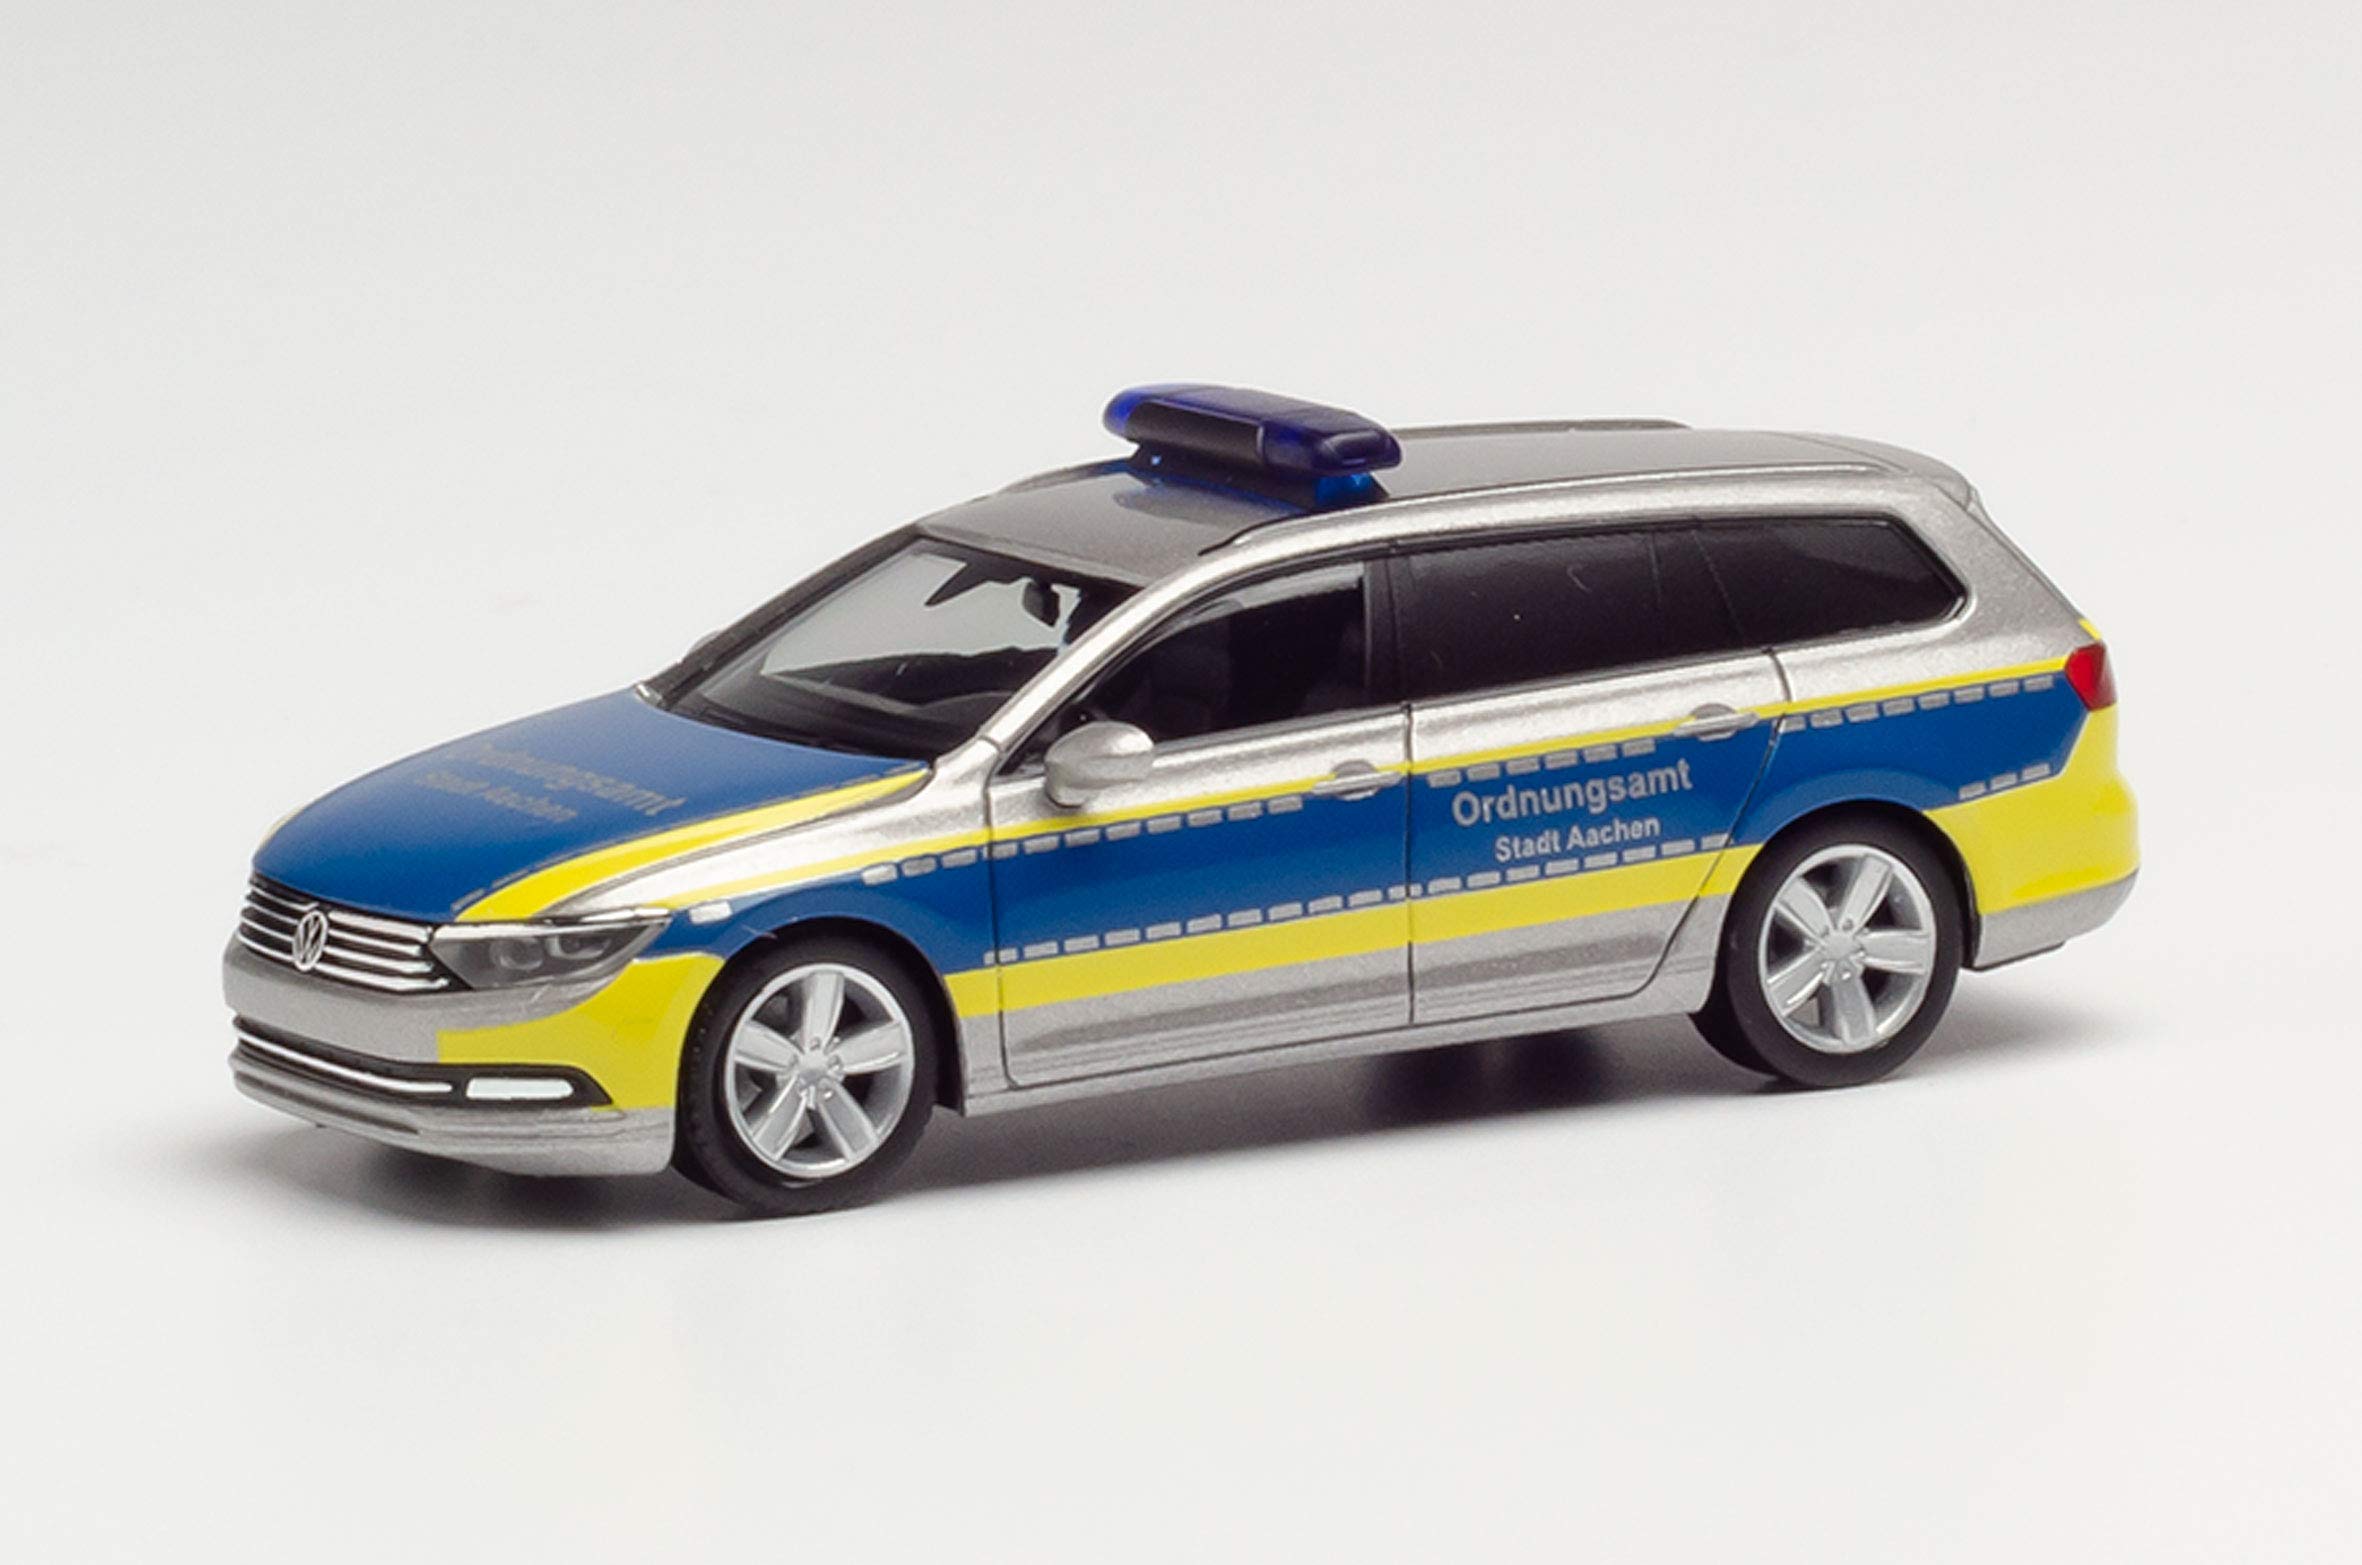 herpa 095228 – VW Passat Variant „Ordnungsamt Aachen“, Modell Auto, Modellsammlung, Miniaturmodelle, Kleinmodell, Sammlerstück, Detailgetreu, Kunststoff, Mehrfarbig - Maßstab 1:87